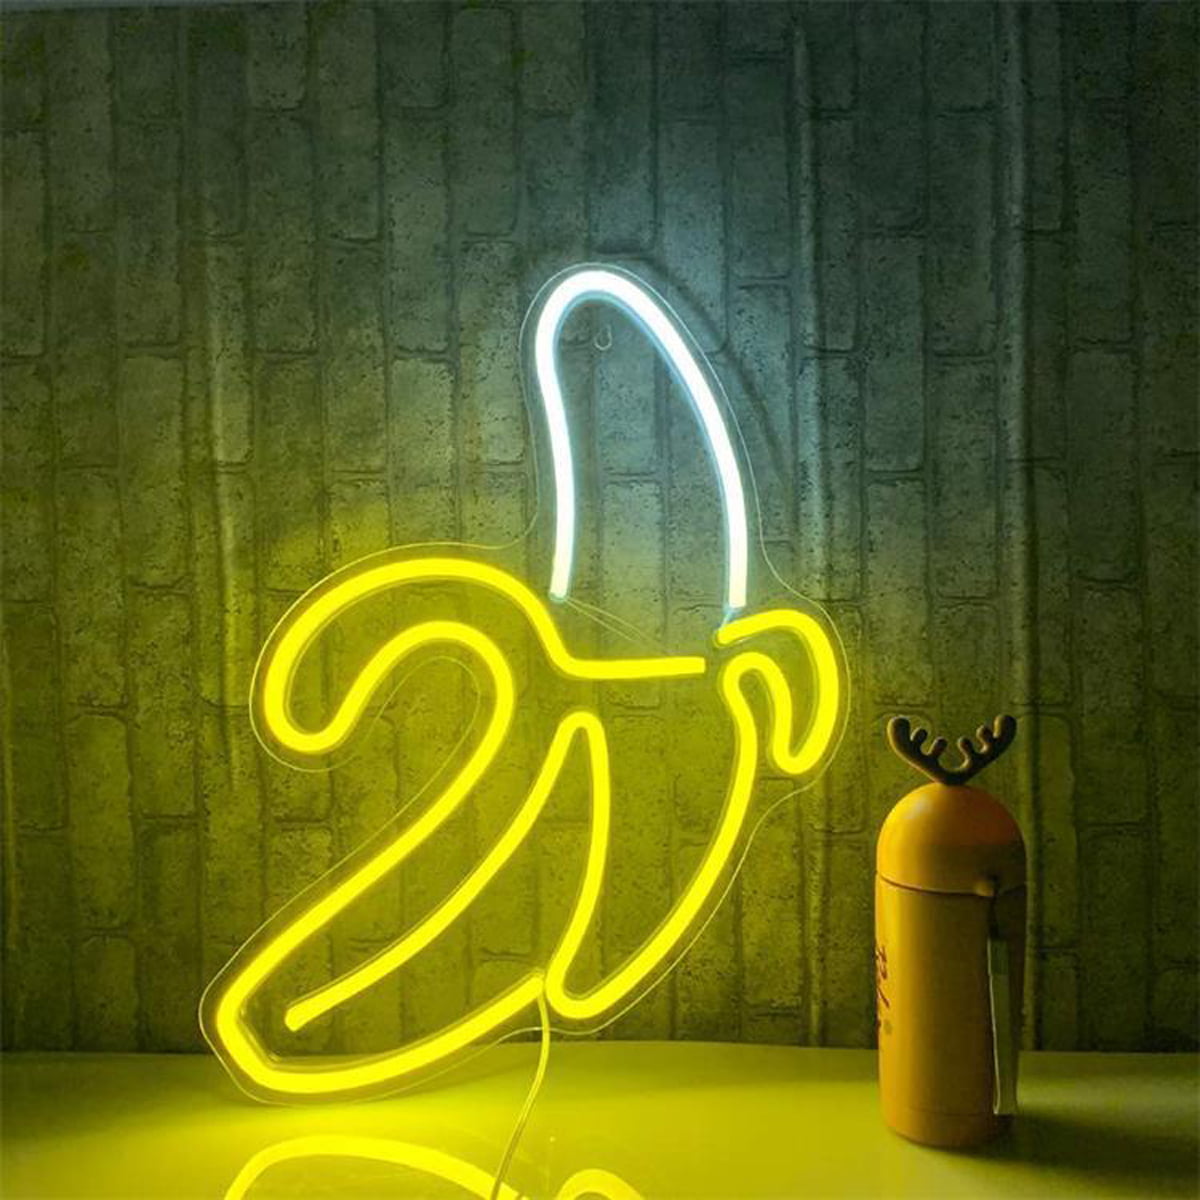 Lightning LED Neon Sign Light Beer Bar Bedroom Wall Decor Art Xmas Party Gifts